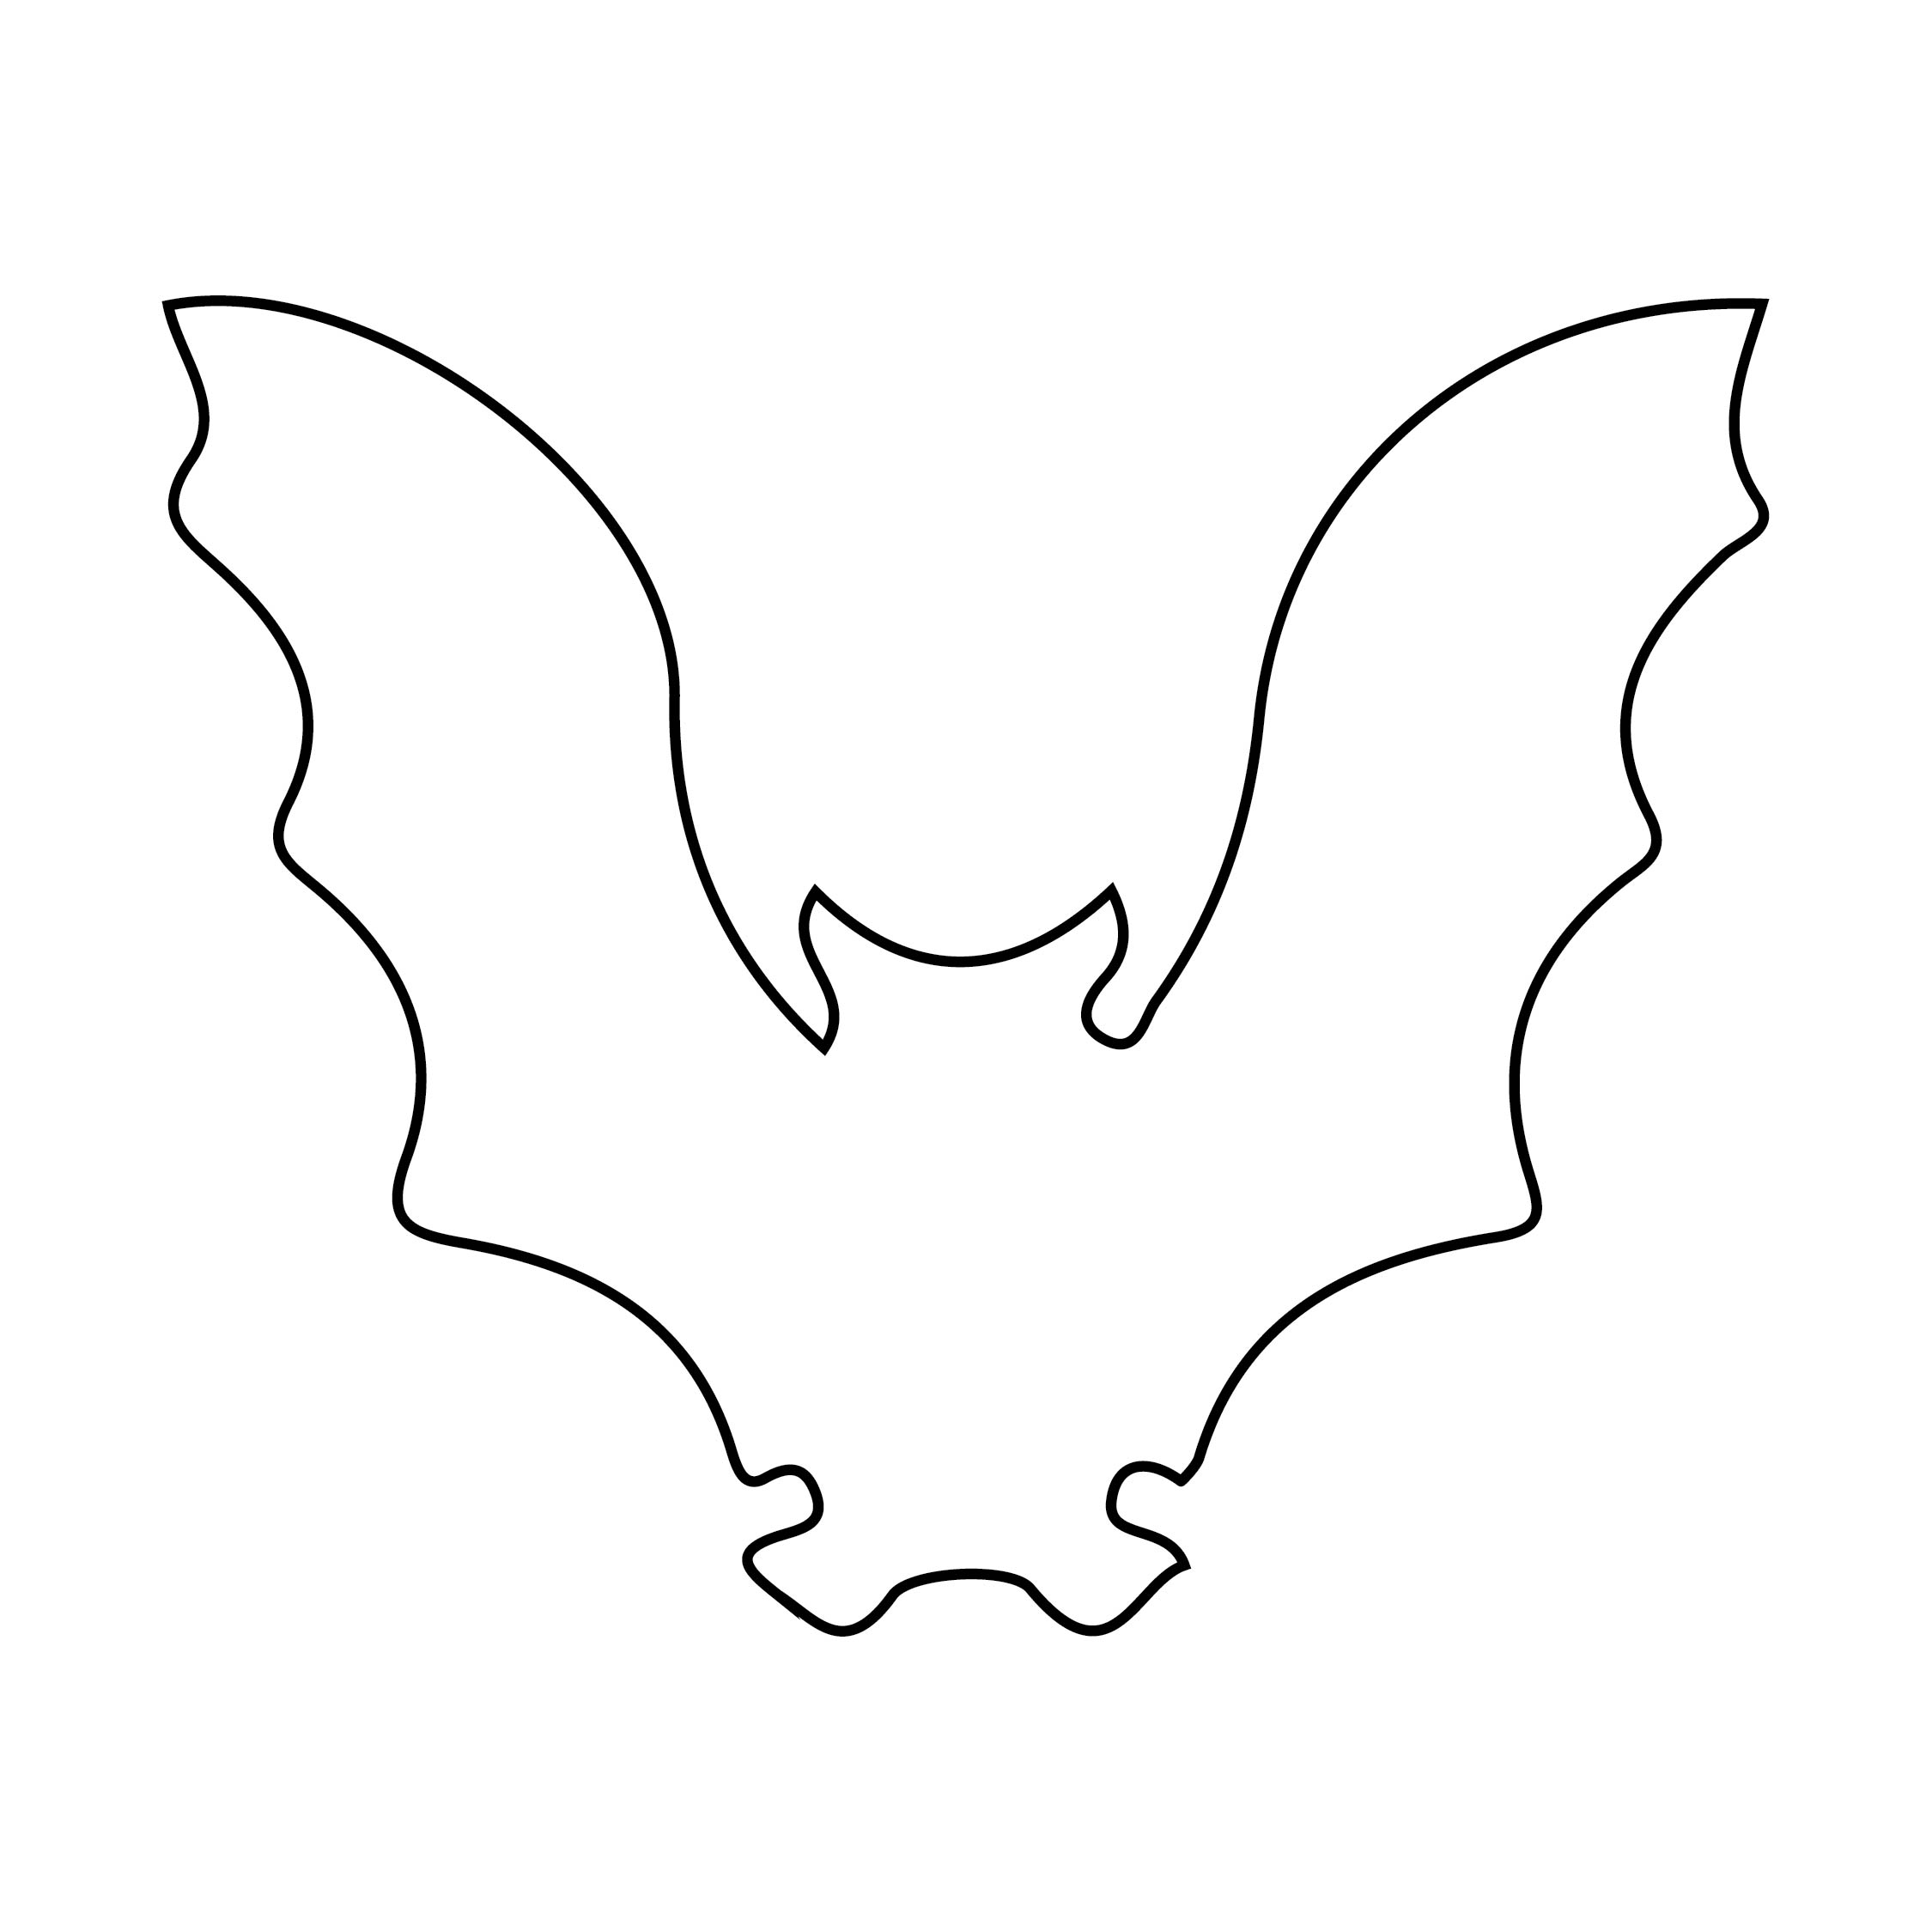 Halloween Bat Template to Print